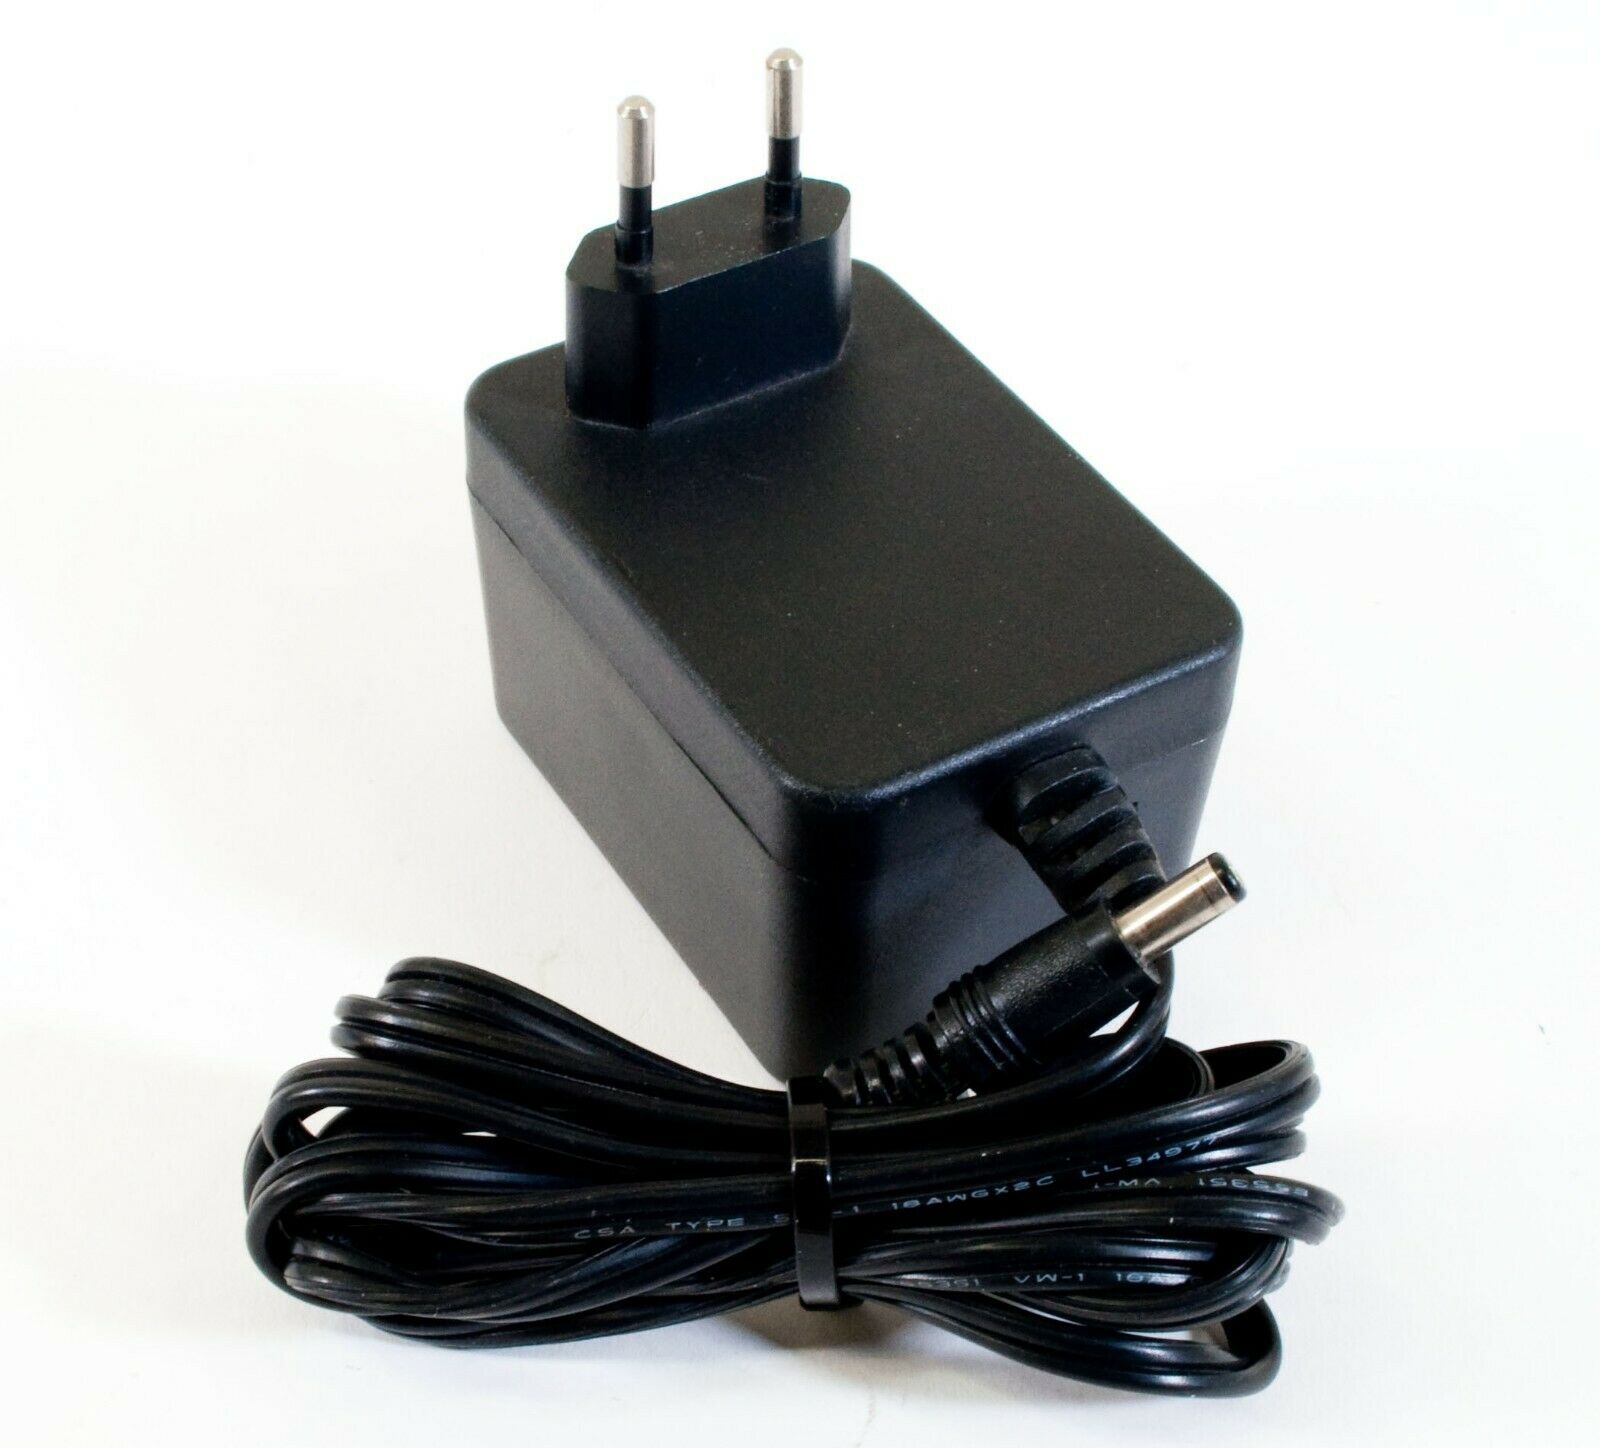 Speclin SL-4801 AC Adapter 13.5V 750mA Original Power Supply Europlug Output Current: 750 mA Voltage: 13.5 V MPN: SL